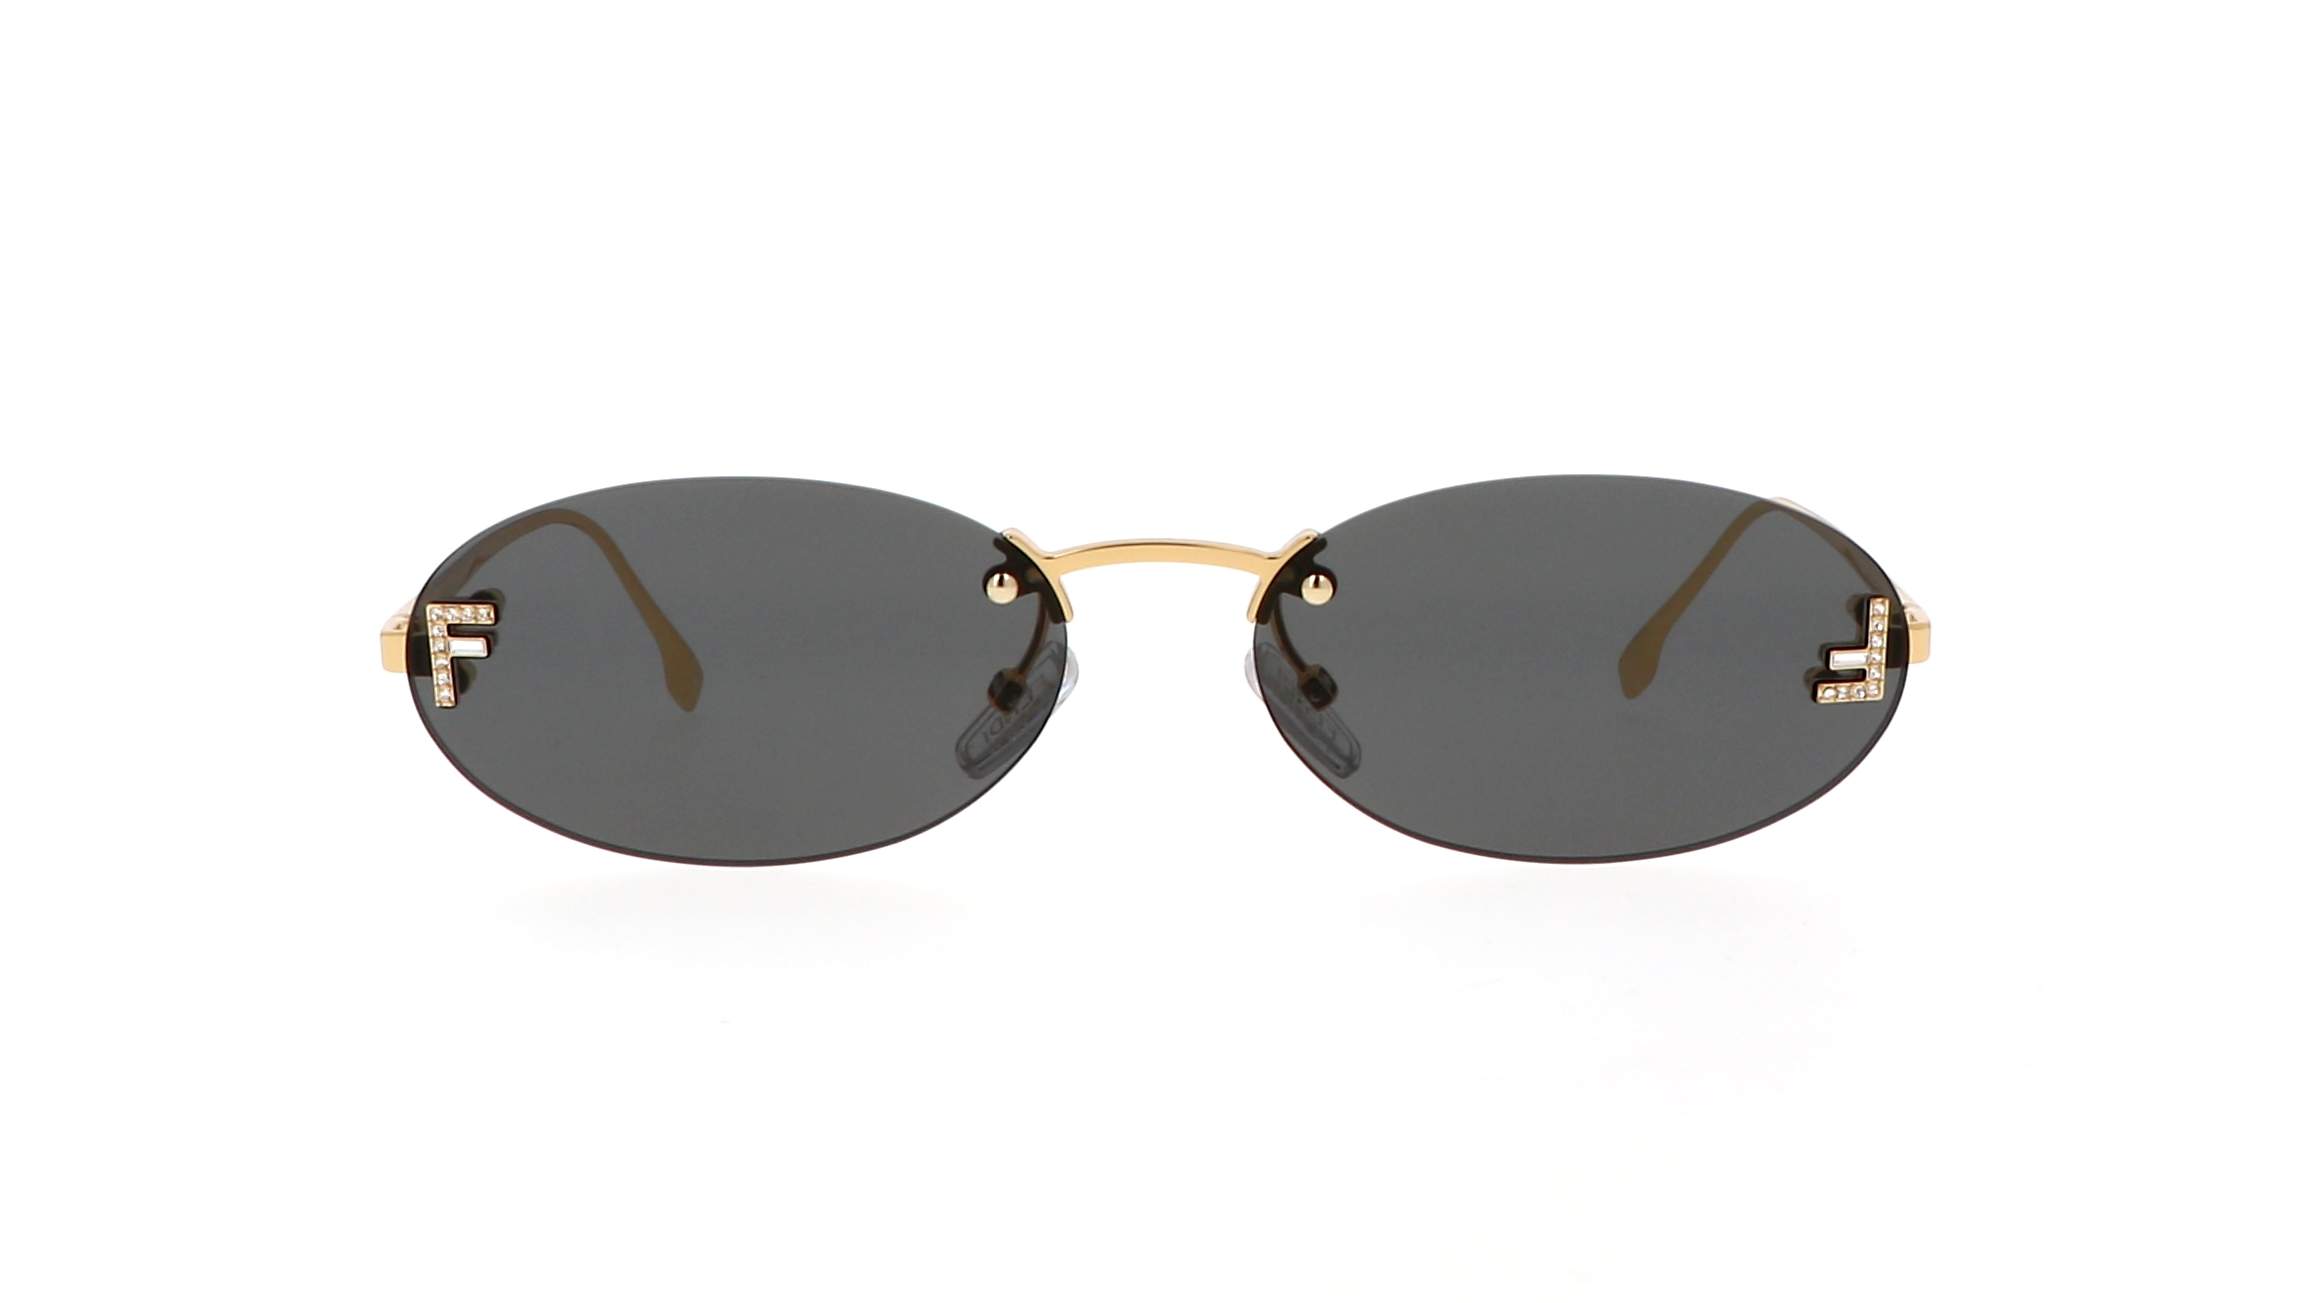 Fendi Sunglasses Gold